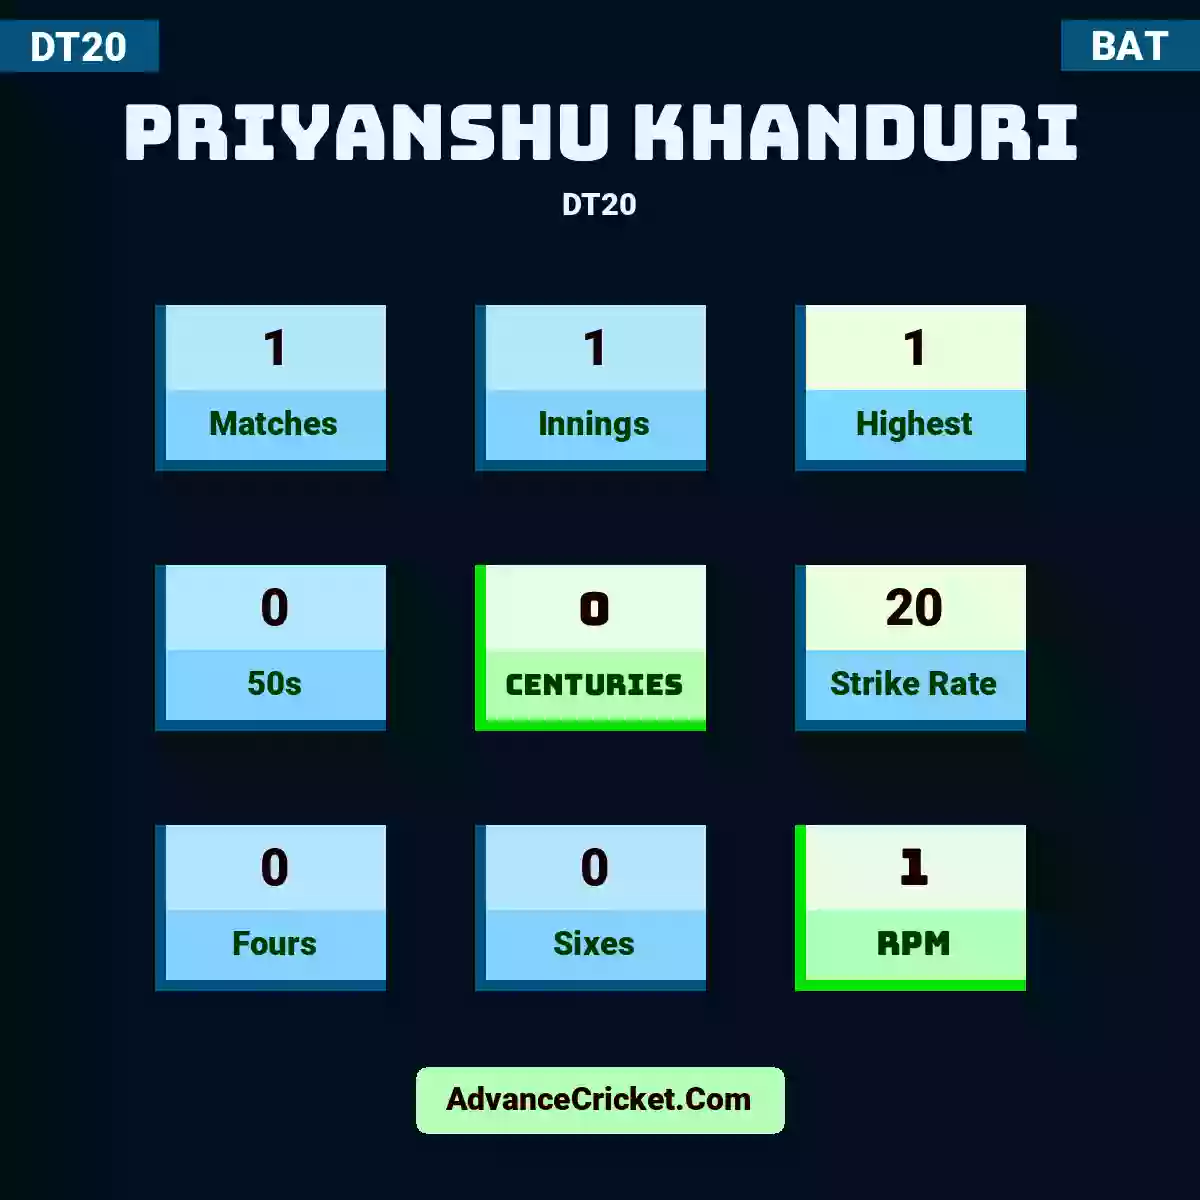 Priyanshu Khanduri DT20 , Priyanshu Khanduri played 1 matches, scored 1 runs as highest, 0 half-centuries, and 0 centuries, with a strike rate of 20. P.Khanduri hit 0 fours and 0 sixes, with an RPM of 1.